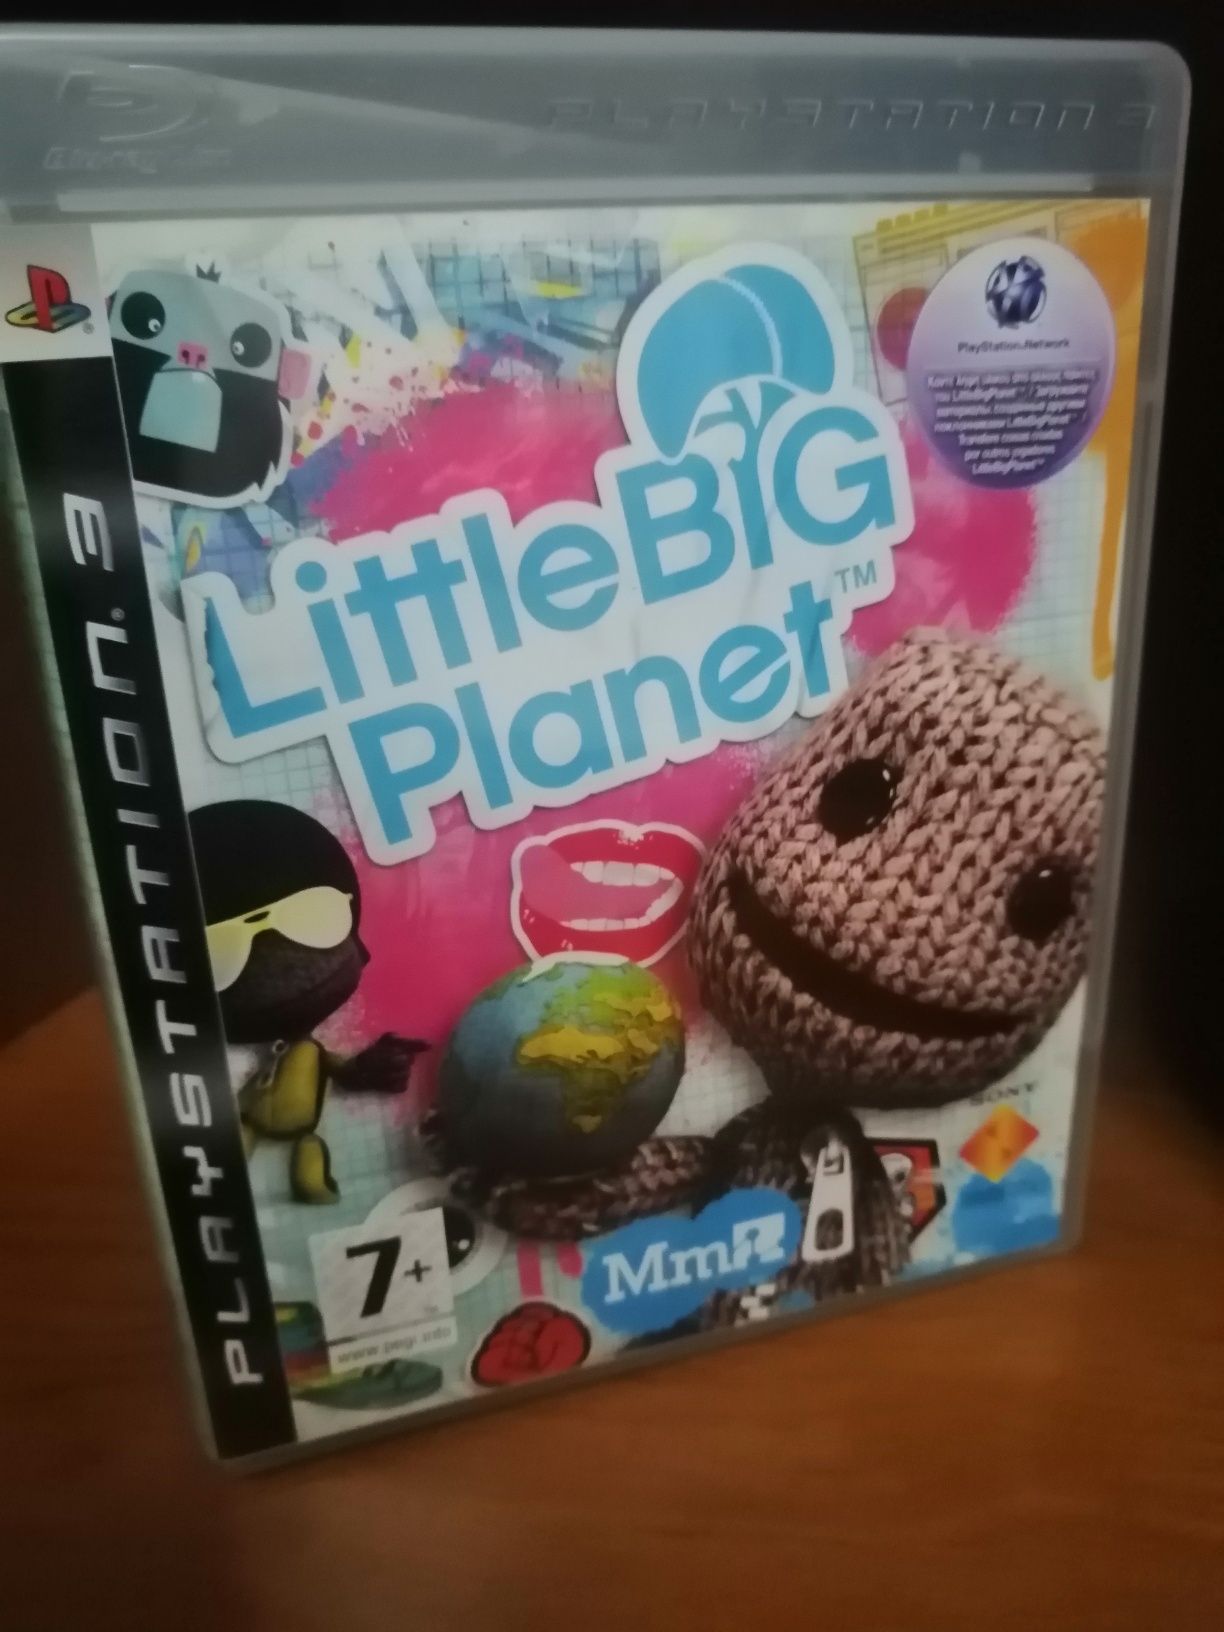 Little big planet ps3